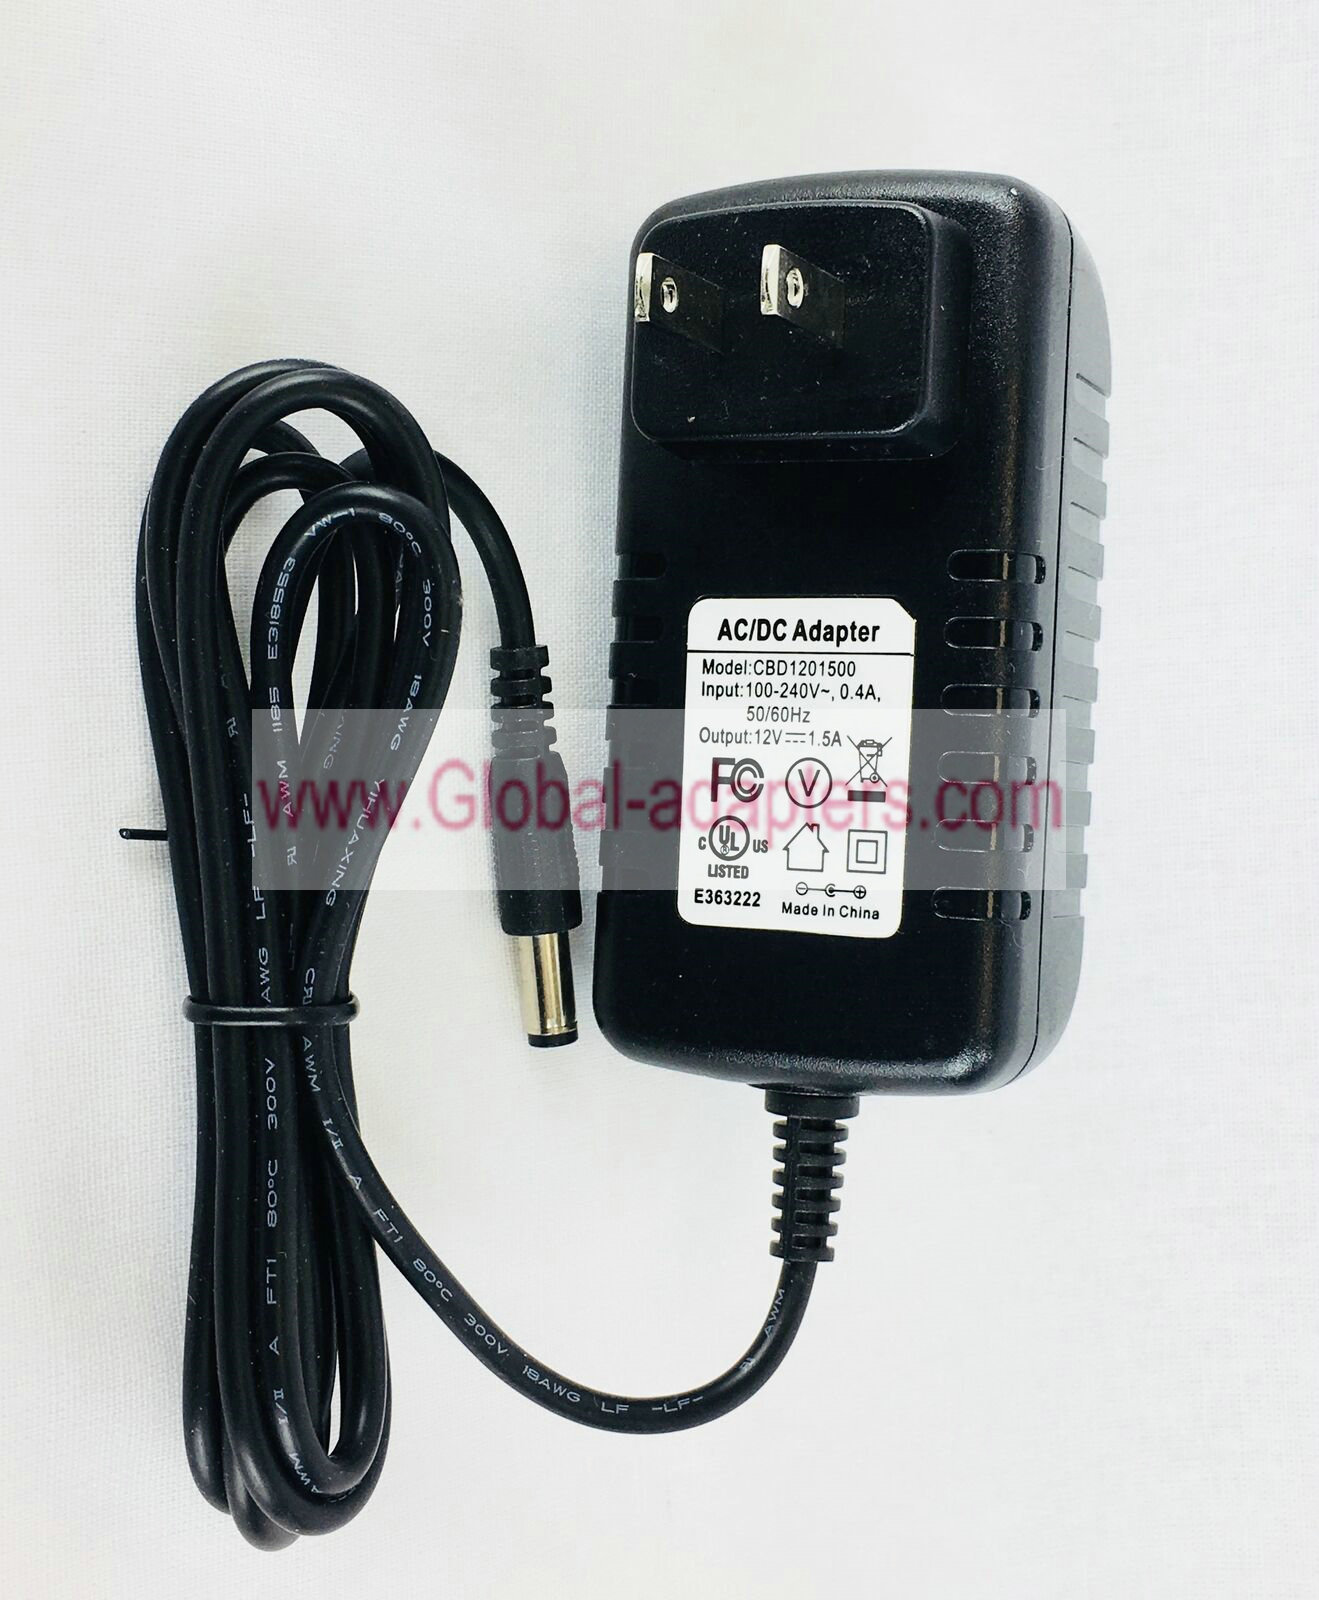 Brand New 12V 1.5A AC/DC Adapter for CBD1201500 Power Supply - Click Image to Close